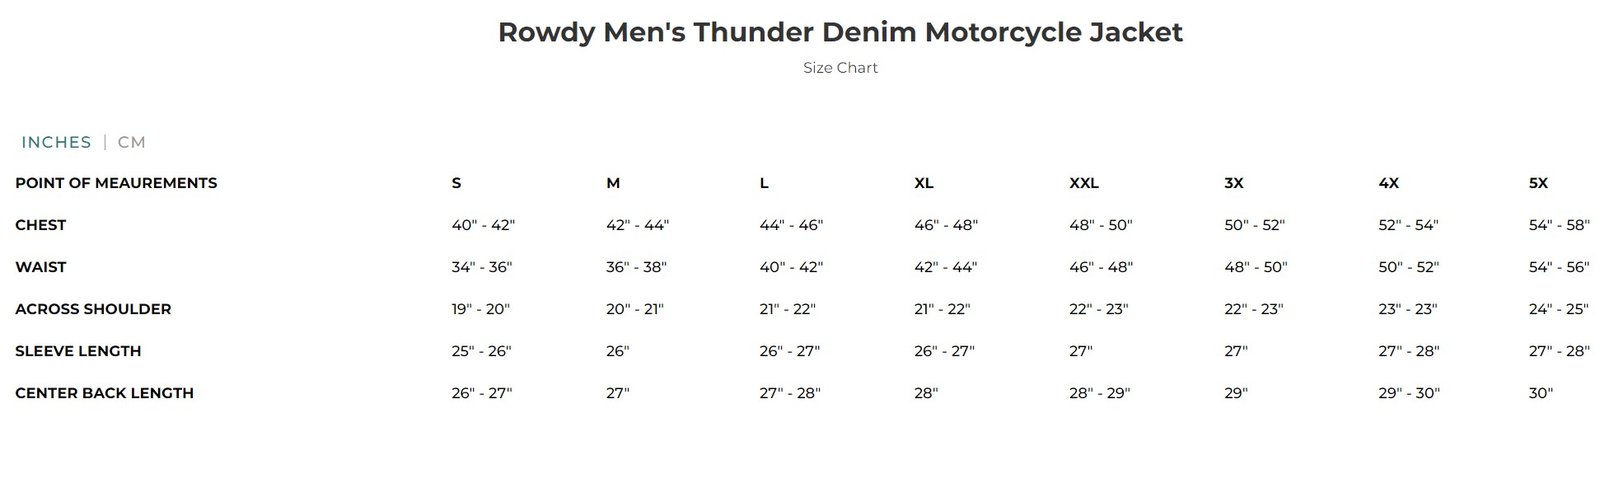 Size chart for men's thunder denim motorcycle jacket.